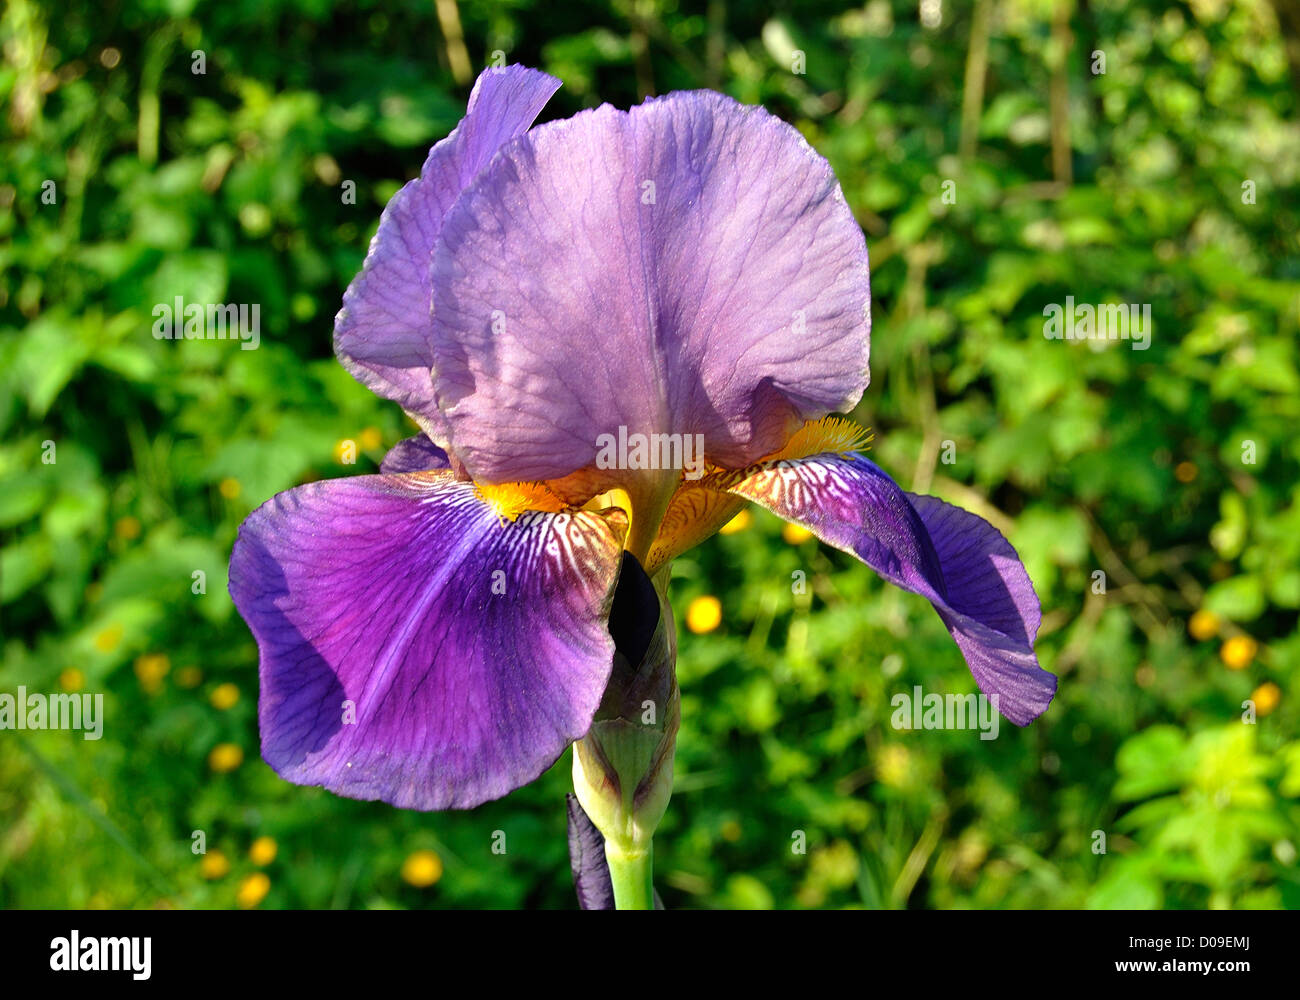 Fleur d'iris (iris germanica, hybride Barbata -Elatior) en fleurs, en mai, dans un jardin. Banque D'Images